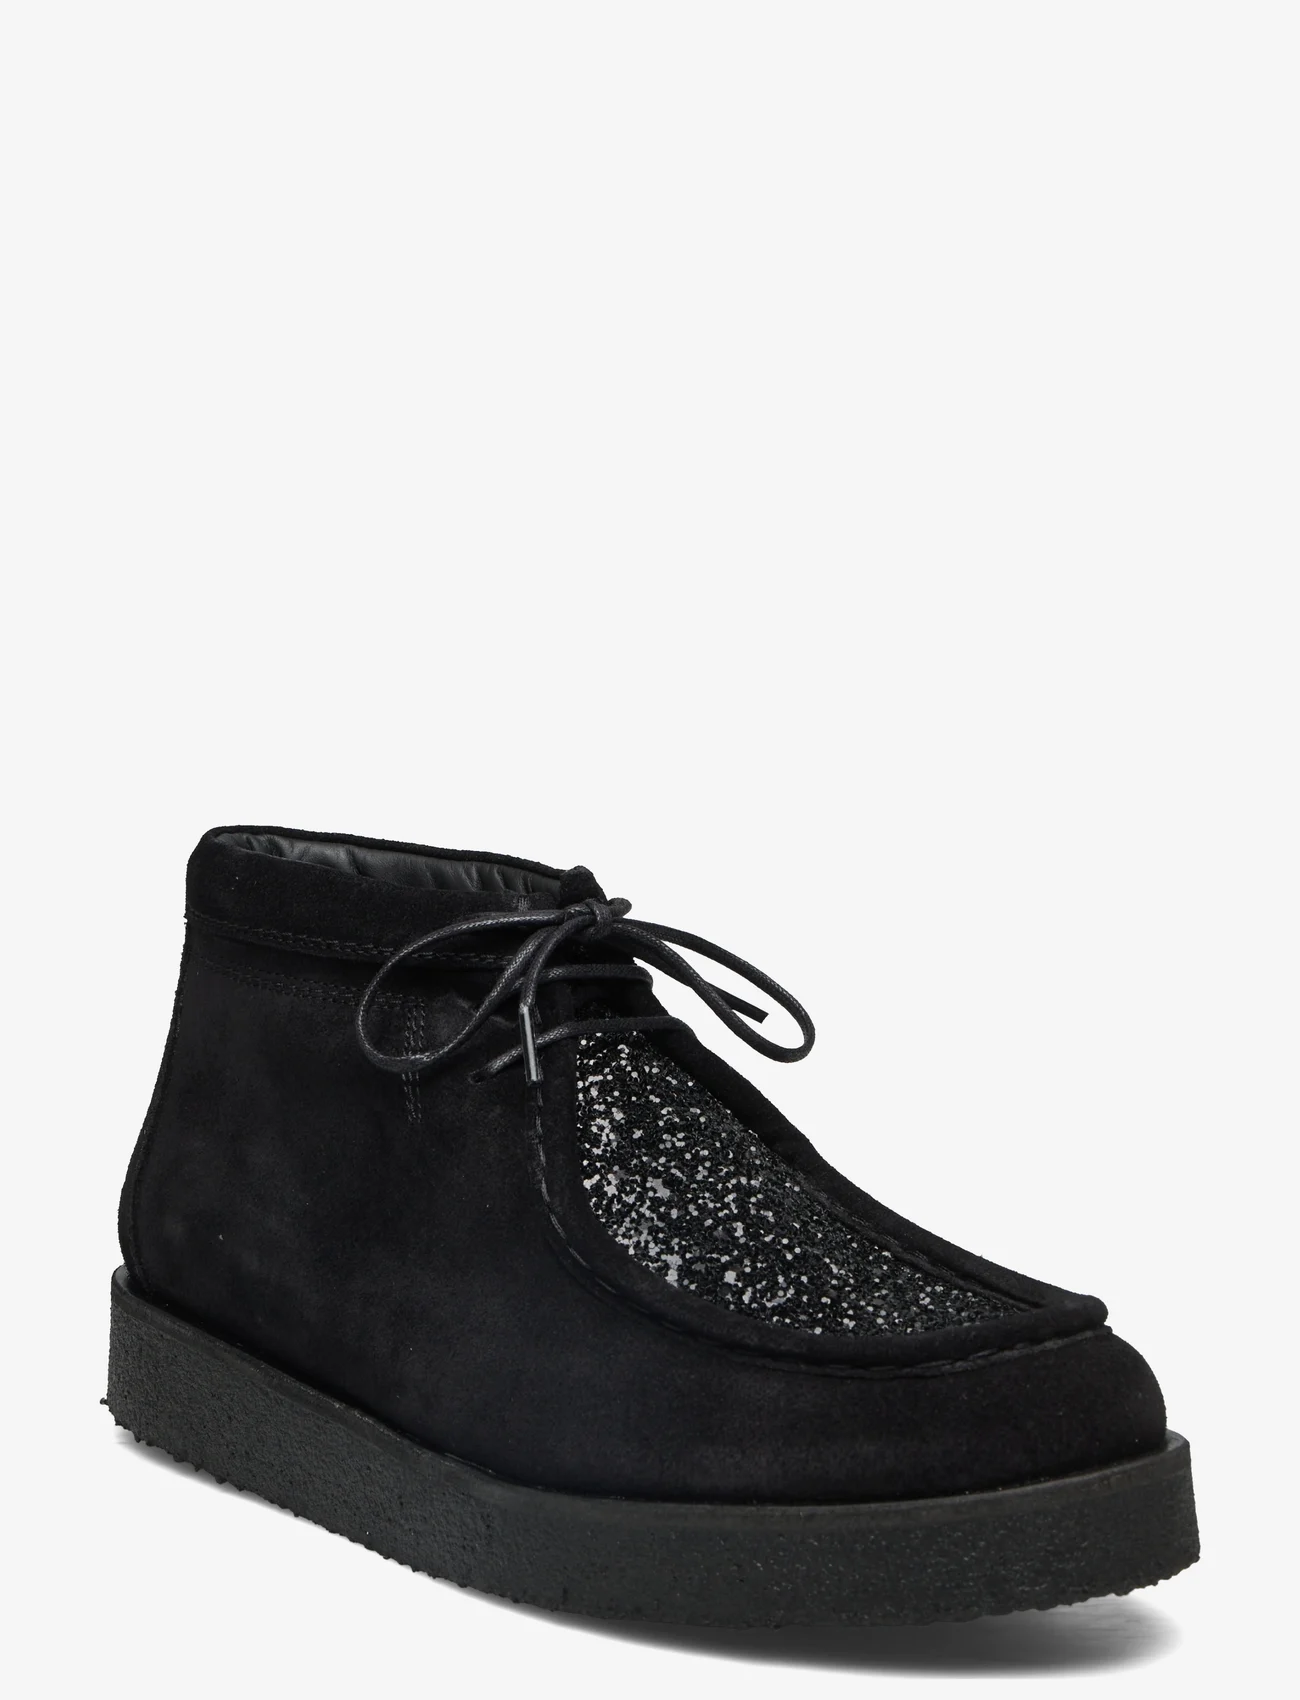 ANGULUS - Shoes - flat - with lace - flats - 1163/2486 black/black glitter - 0